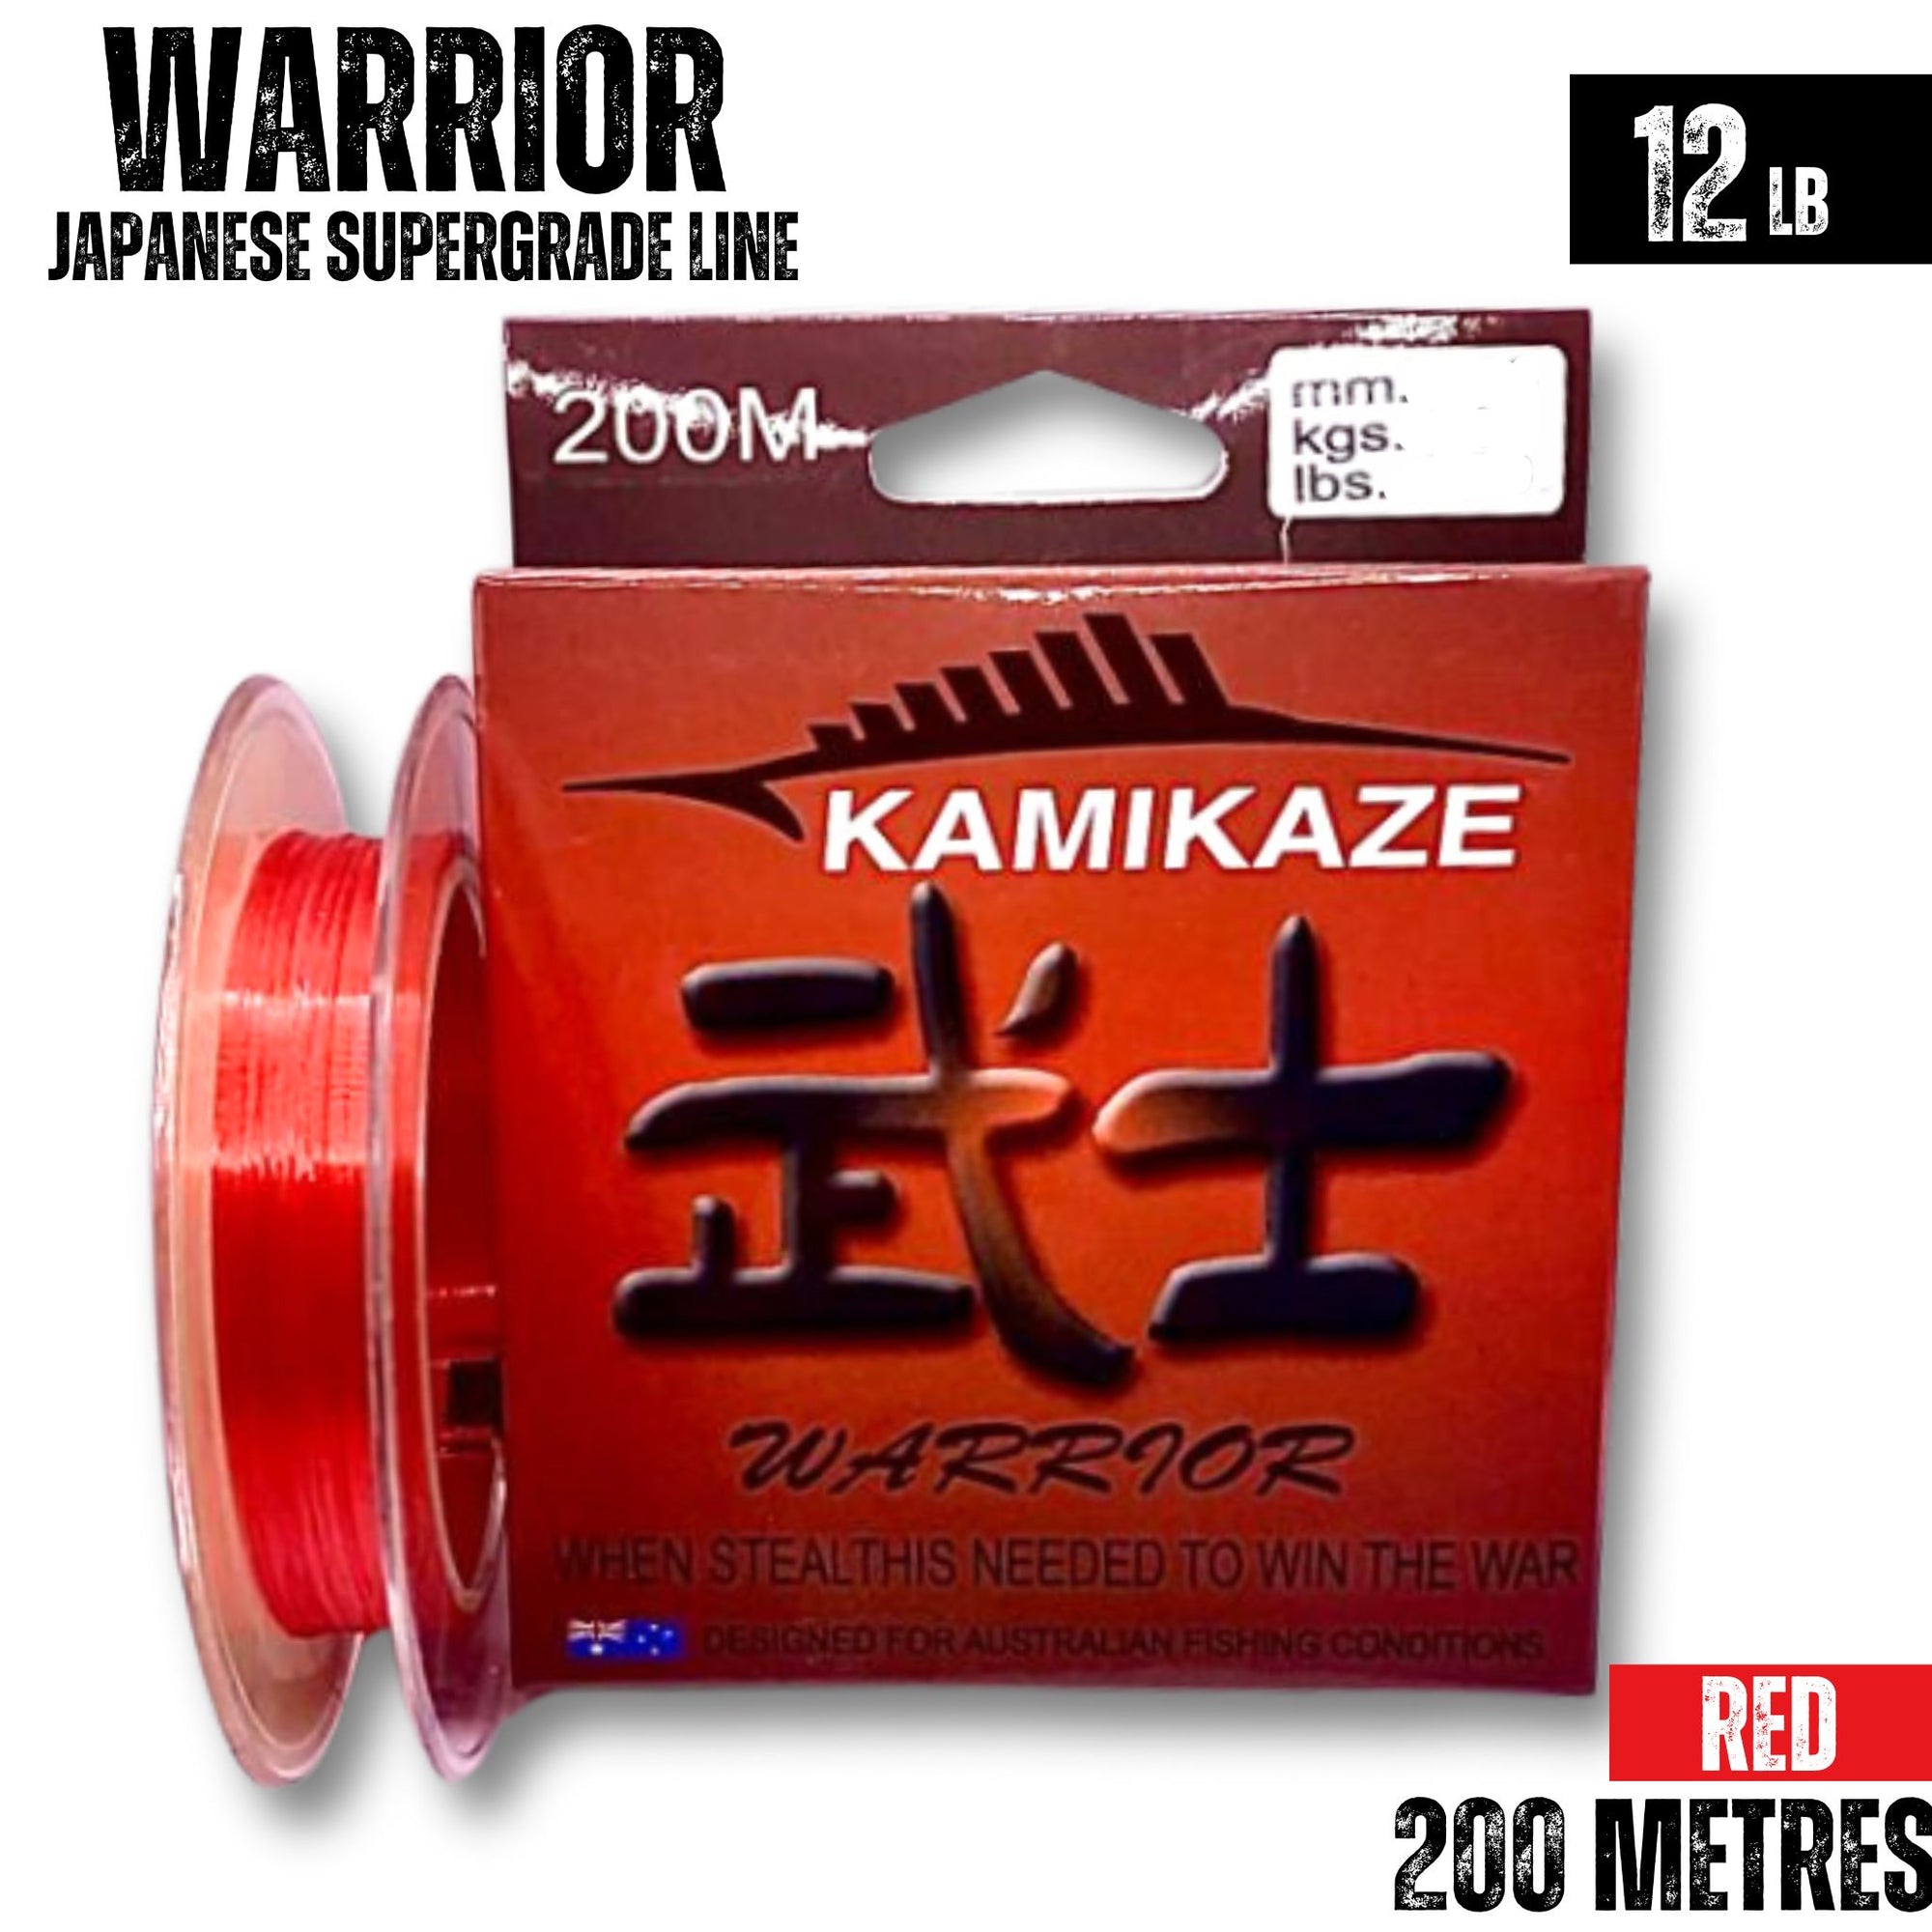 Kamikaze WARRIOR Japanese SuperGradeLine 200m 12lb RED - South East Clearance Centre